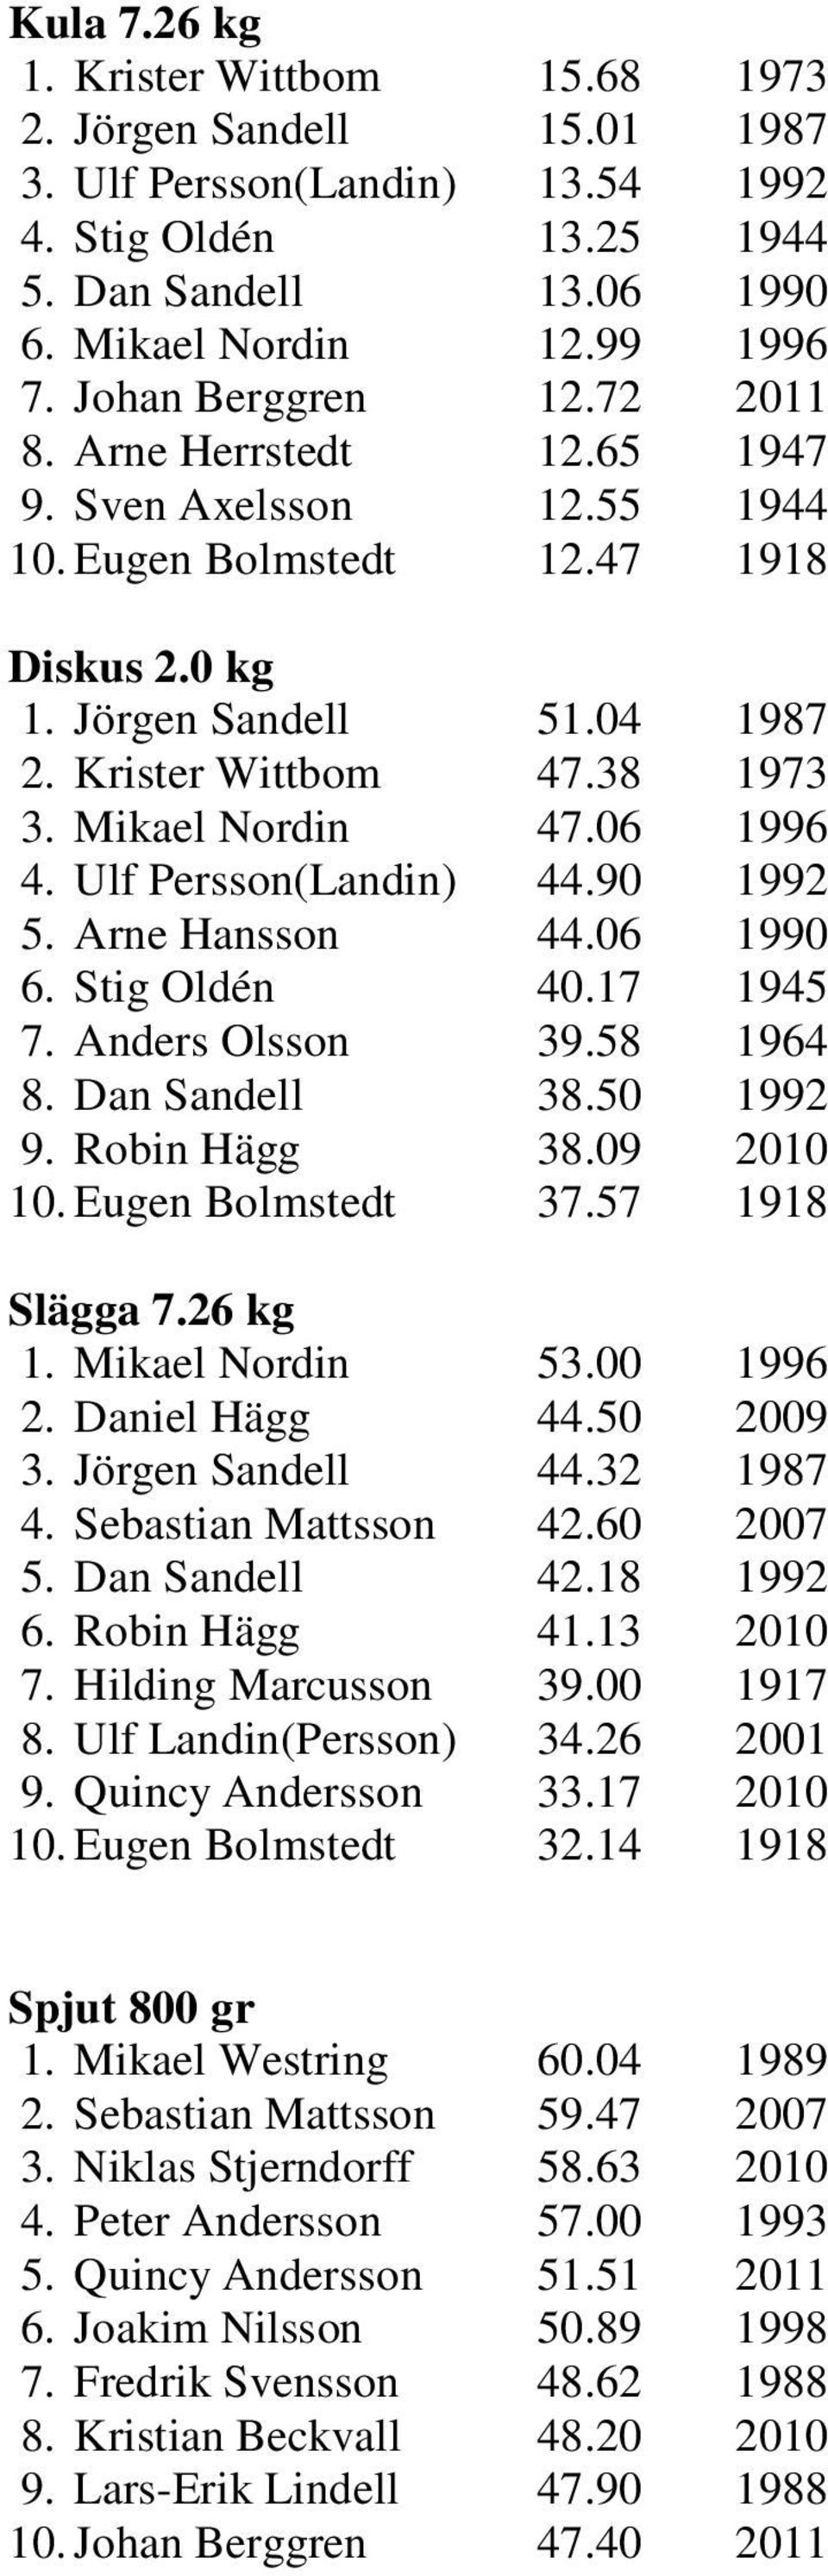 Mikael Nordin 47.06 1996 4. Ulf Persson(Landin) 44.90 1992 5. Arne Hansson 44.06 1990 6. Stig Oldén 40.17 1945 7. Anders Olsson 39.58 1964 8. Dan Sandell 38.50 1992 9. Robin Hägg 38.09 2010 10.